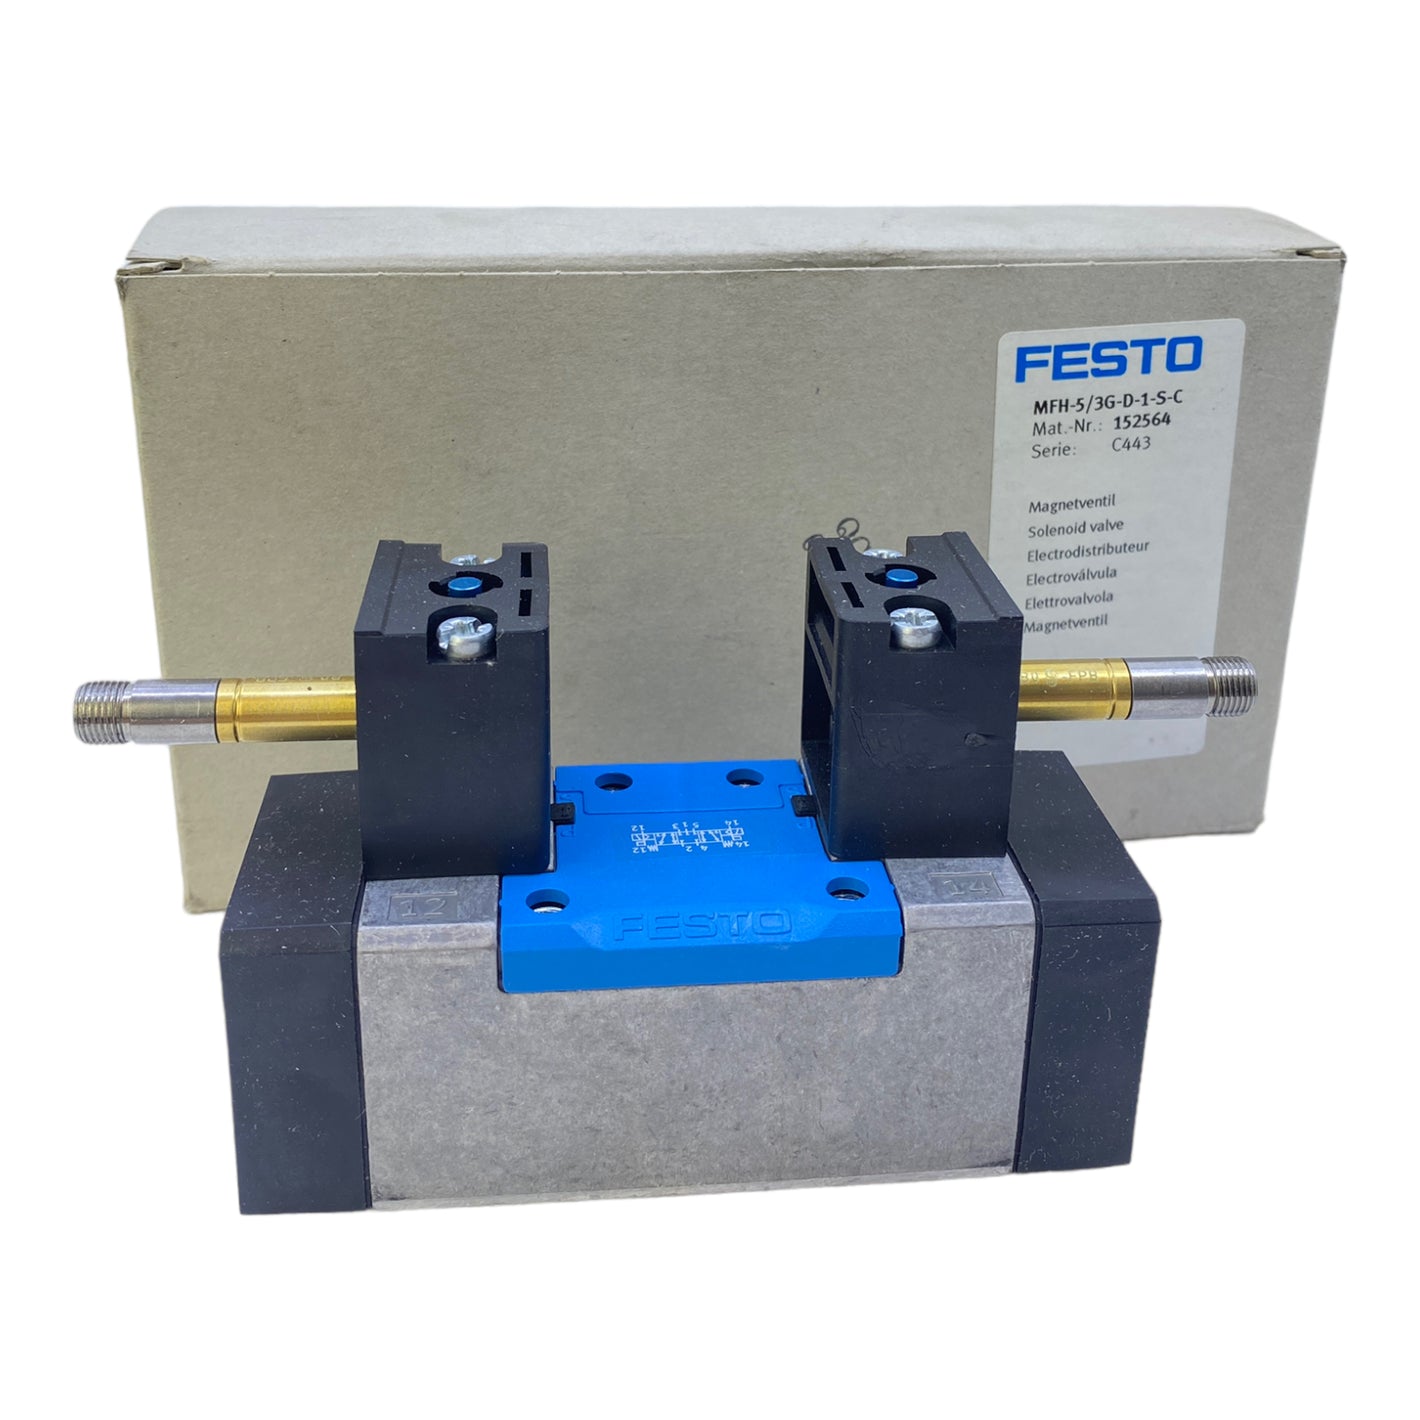 Festo MFH-5/3G-D-1-S-C Magnetventil 152564 drosselbar -0,9 bis 16 bar